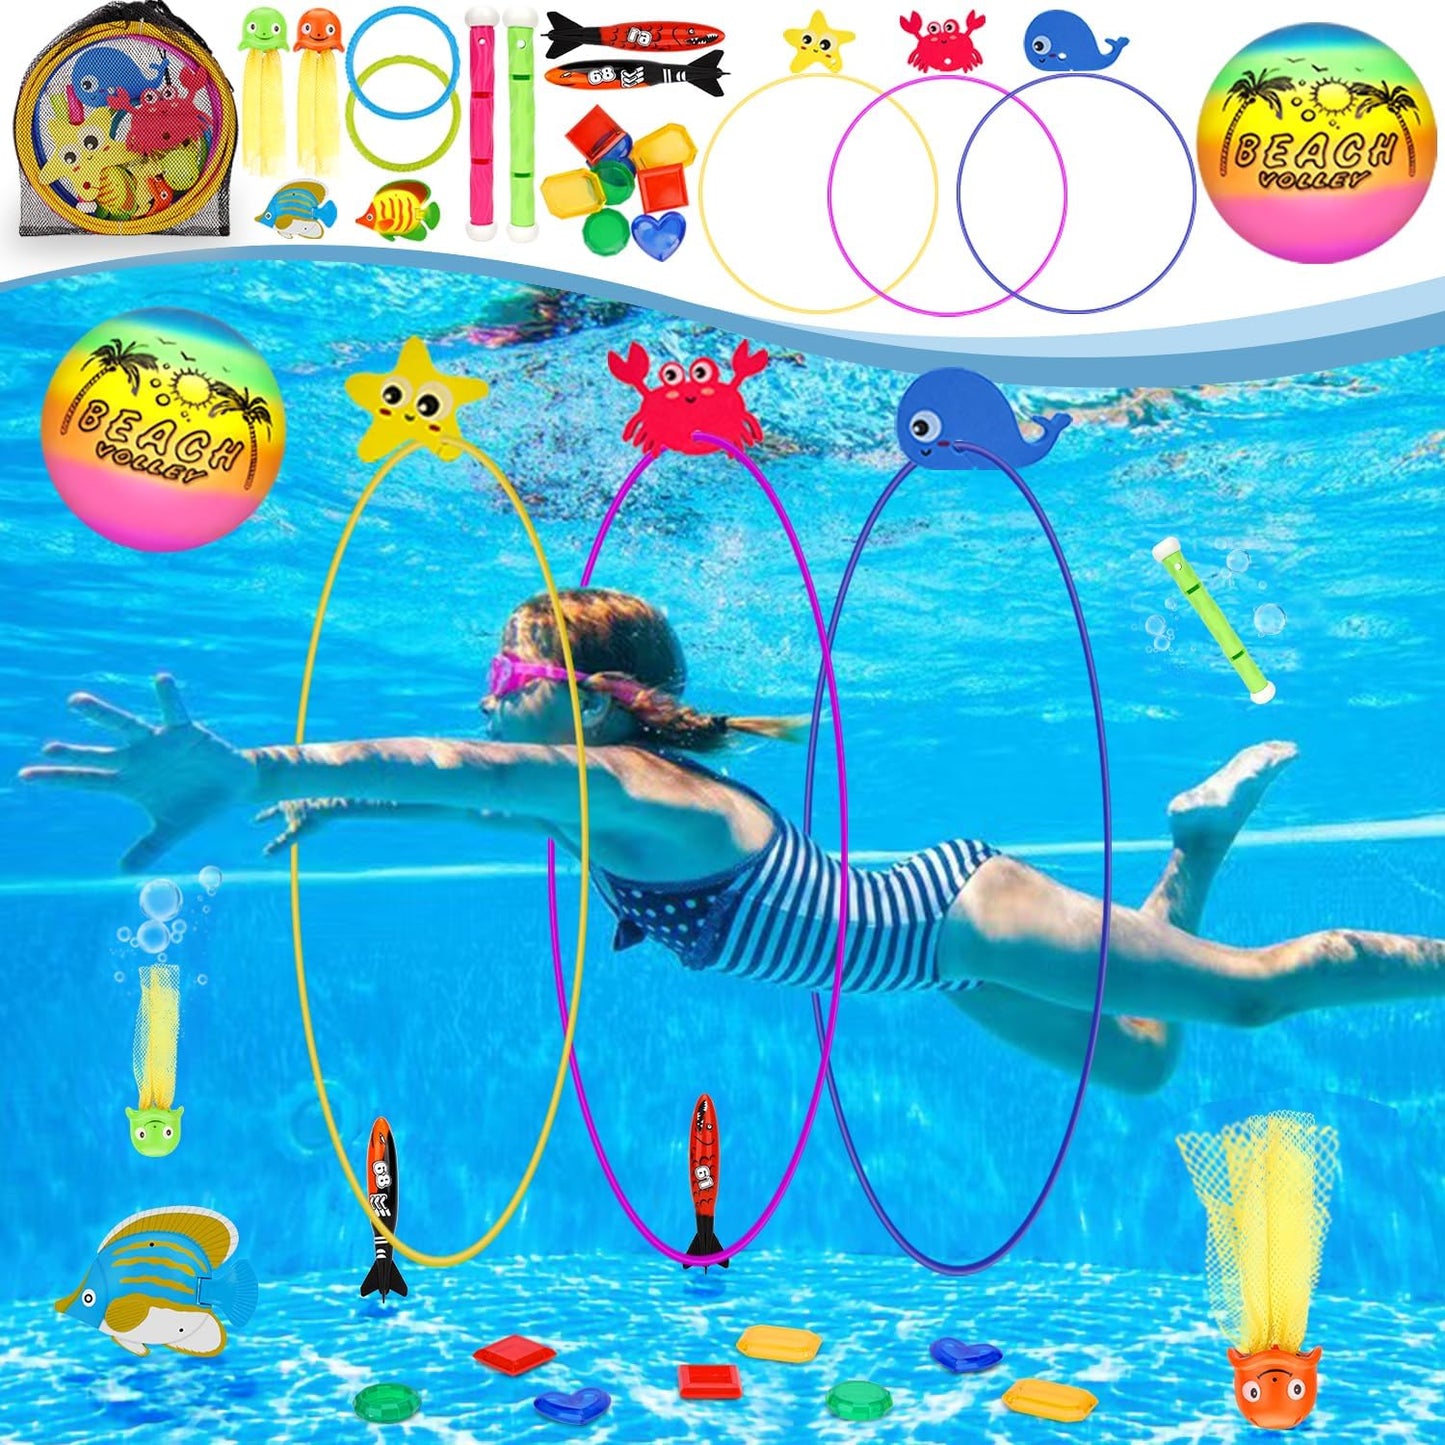 Diving Toys,27 Pcs Pool Toys with Diving Swim Thru Rings for Kids Age 3-12,Dive Sticks,Diving Rings,Diving Gem,Diving Octopus,Pool Torpedo,Mesh Bag Include